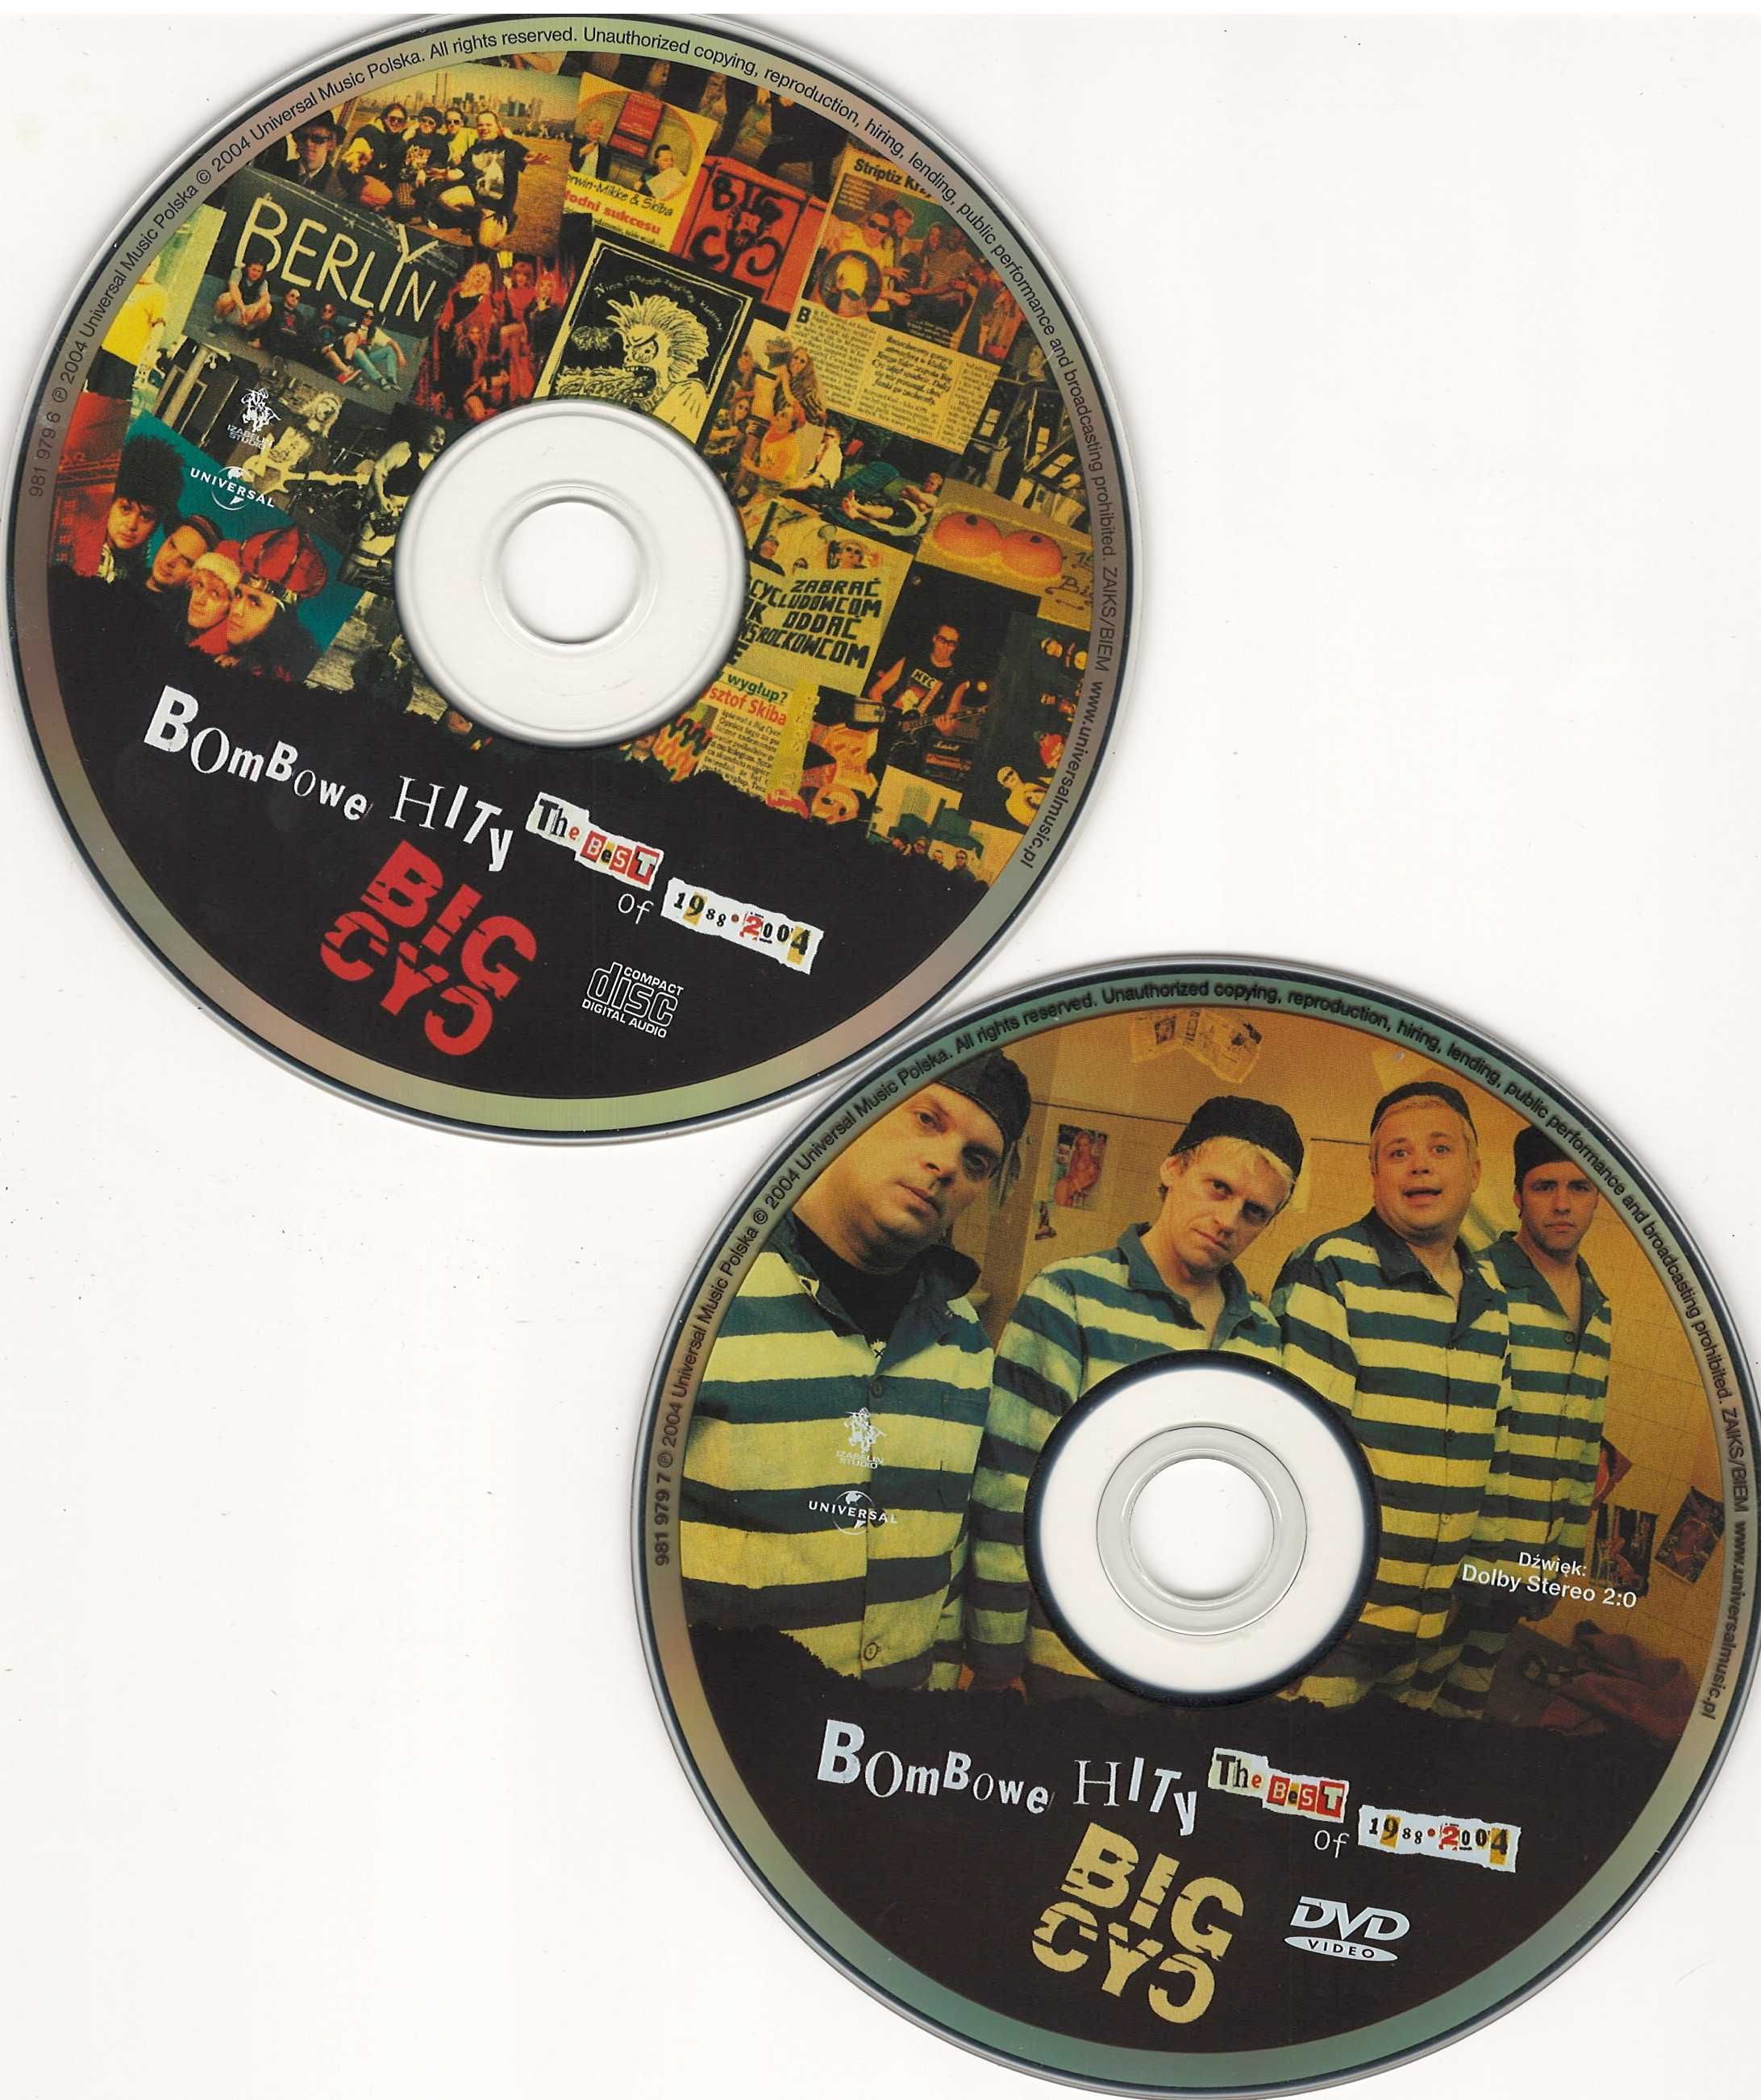 BIG CYC – Bombowe Hity (The best of 1988  - 2004) CD+DVD